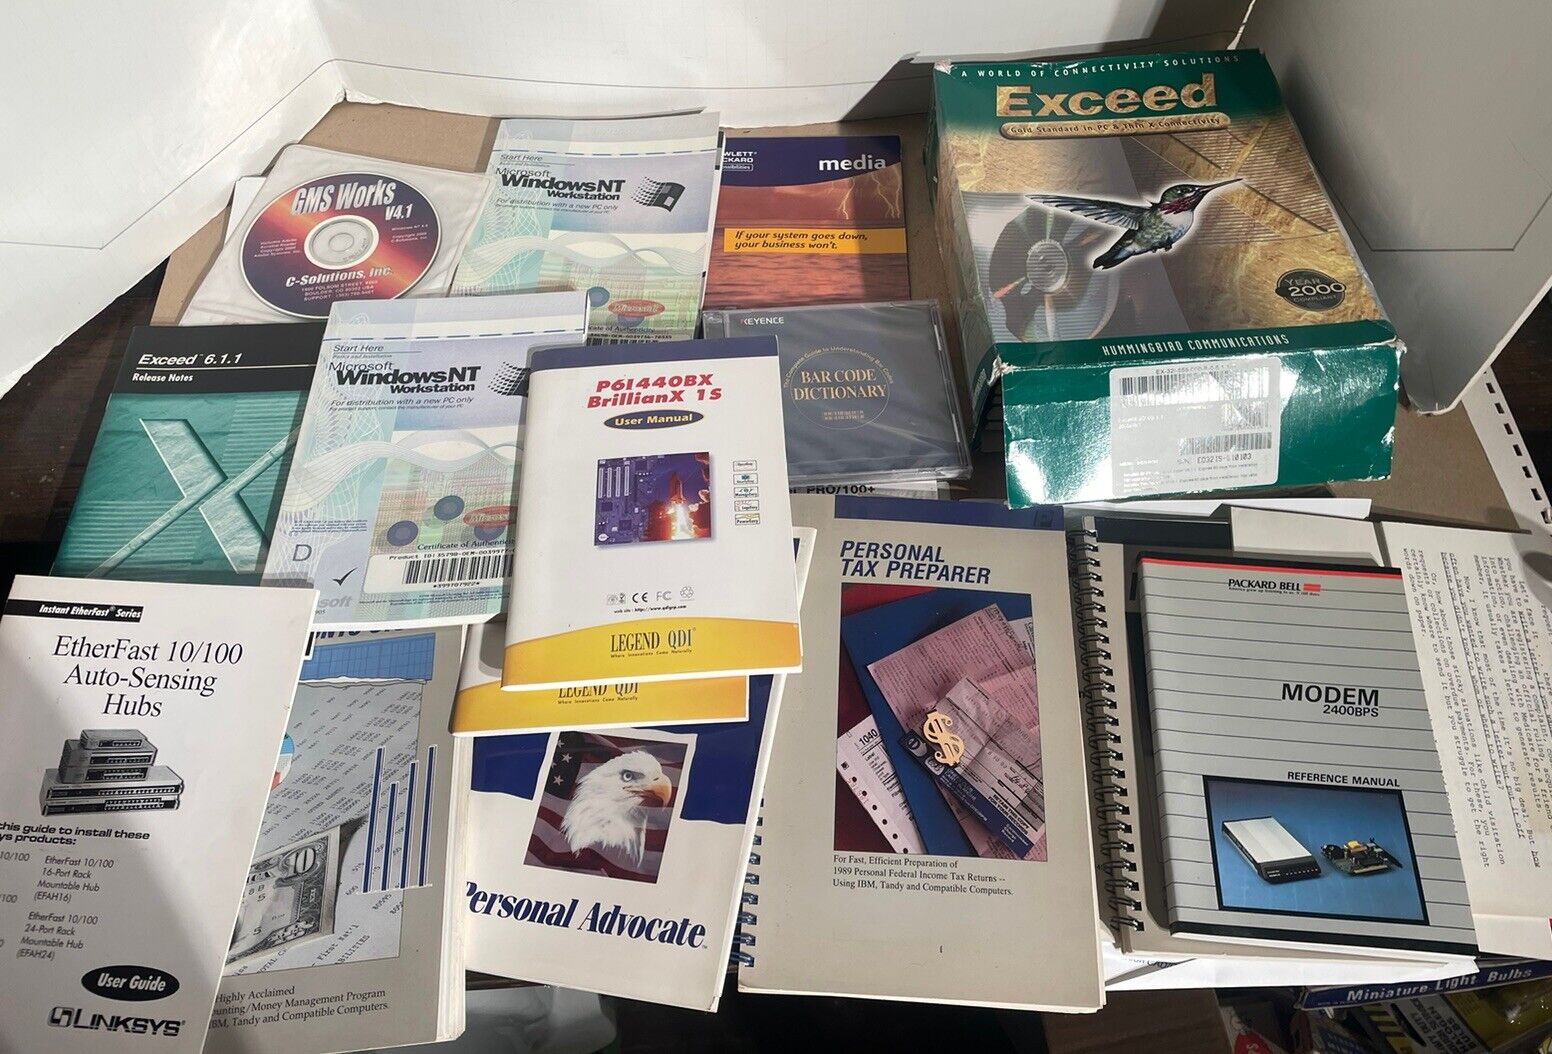 HUGE Lot Of Computer Disks Manuals Software Hardware - Exceed, Windows NT